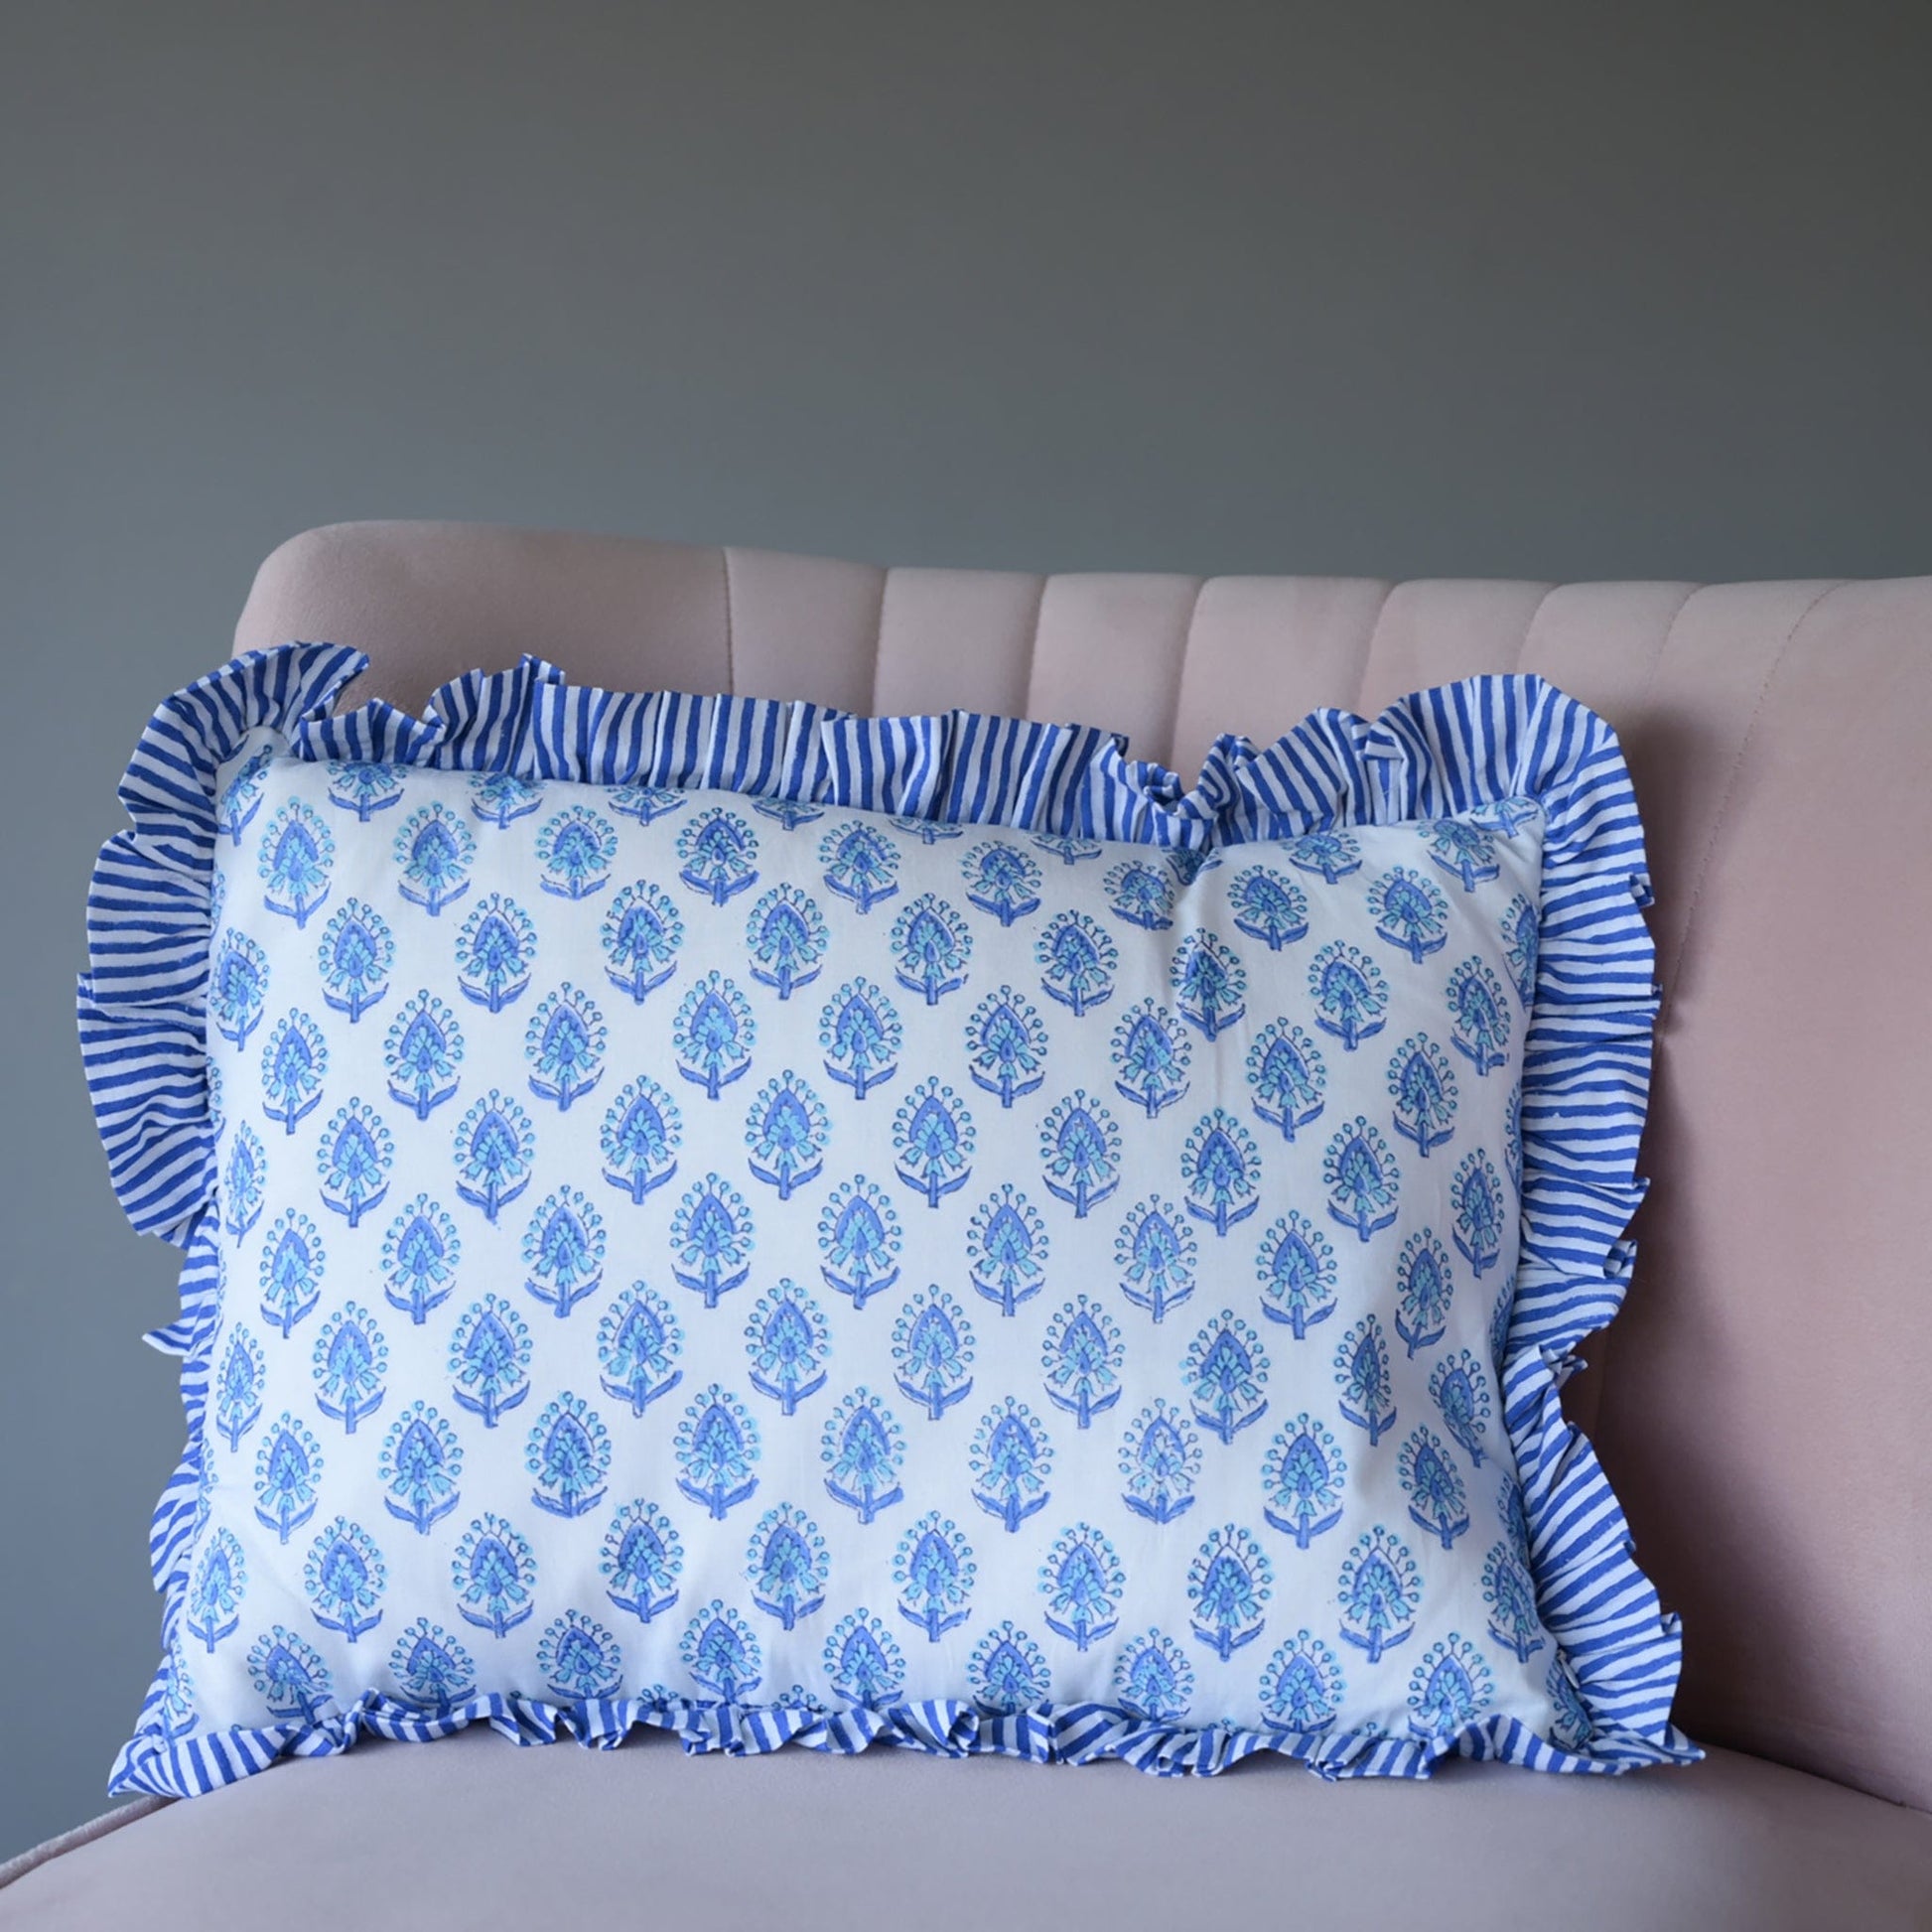 Cushions Small Ruffle Cushion - Blue Sea Spray Flowers 19134